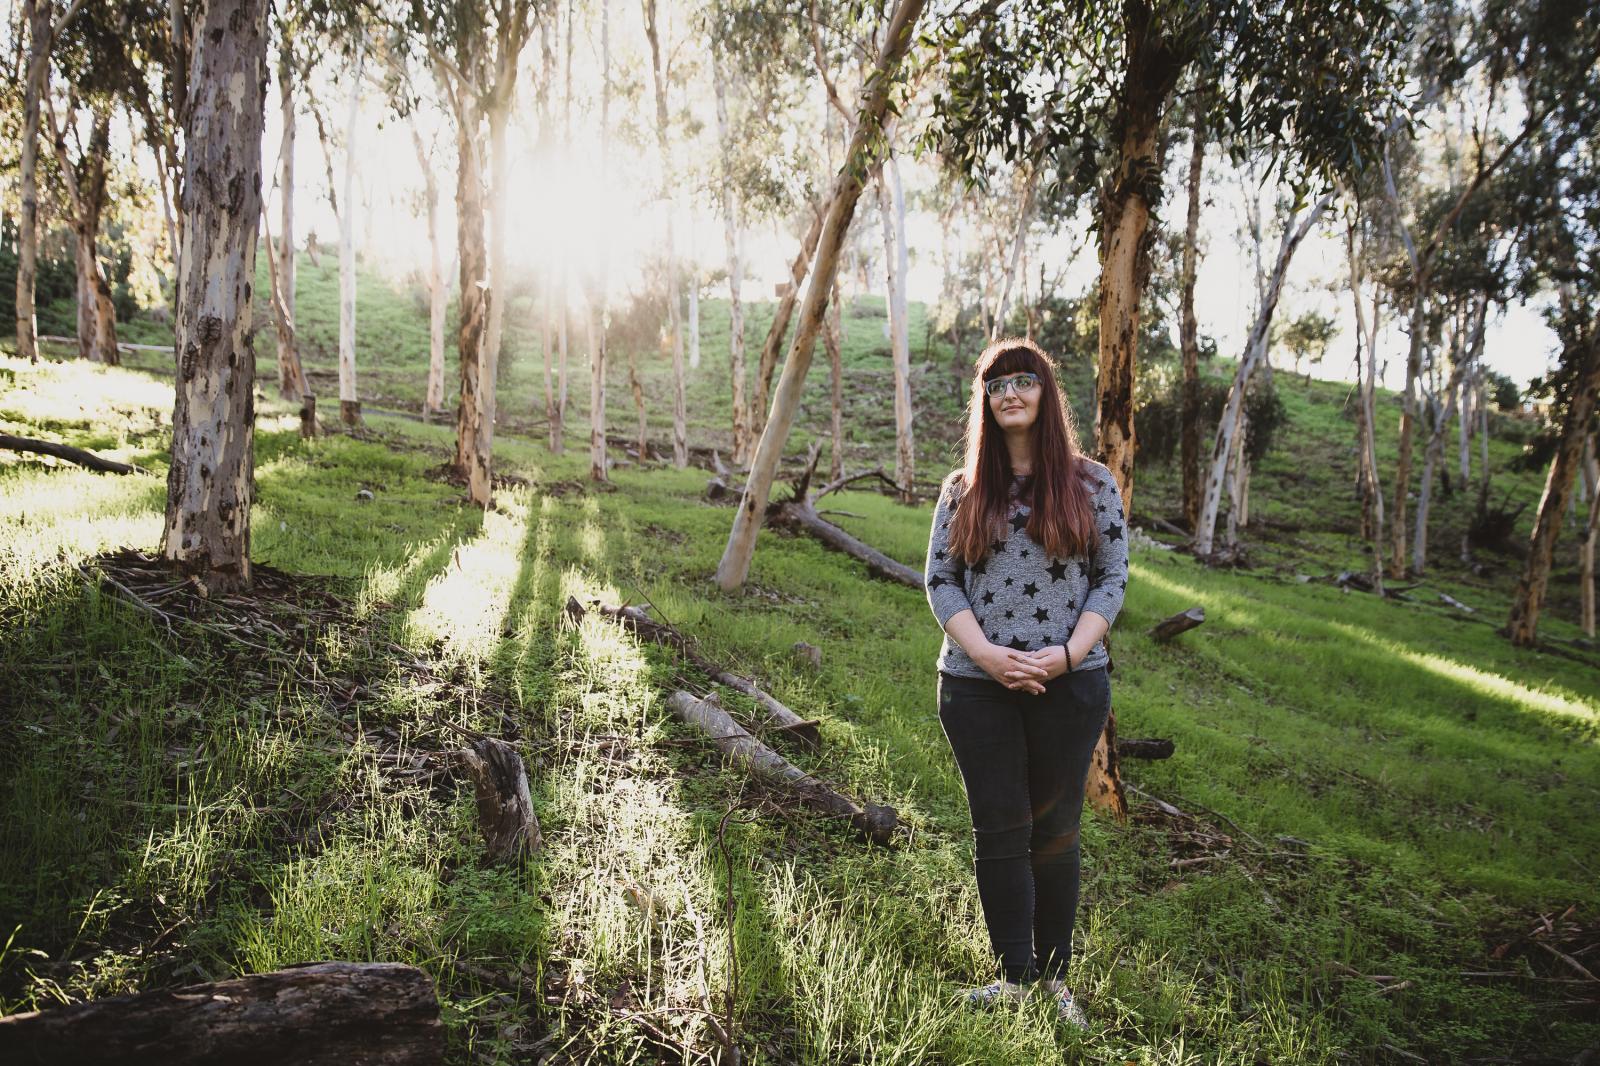 Environmental  - Megan King in Hosp Grove Park in Carlsbad, California.